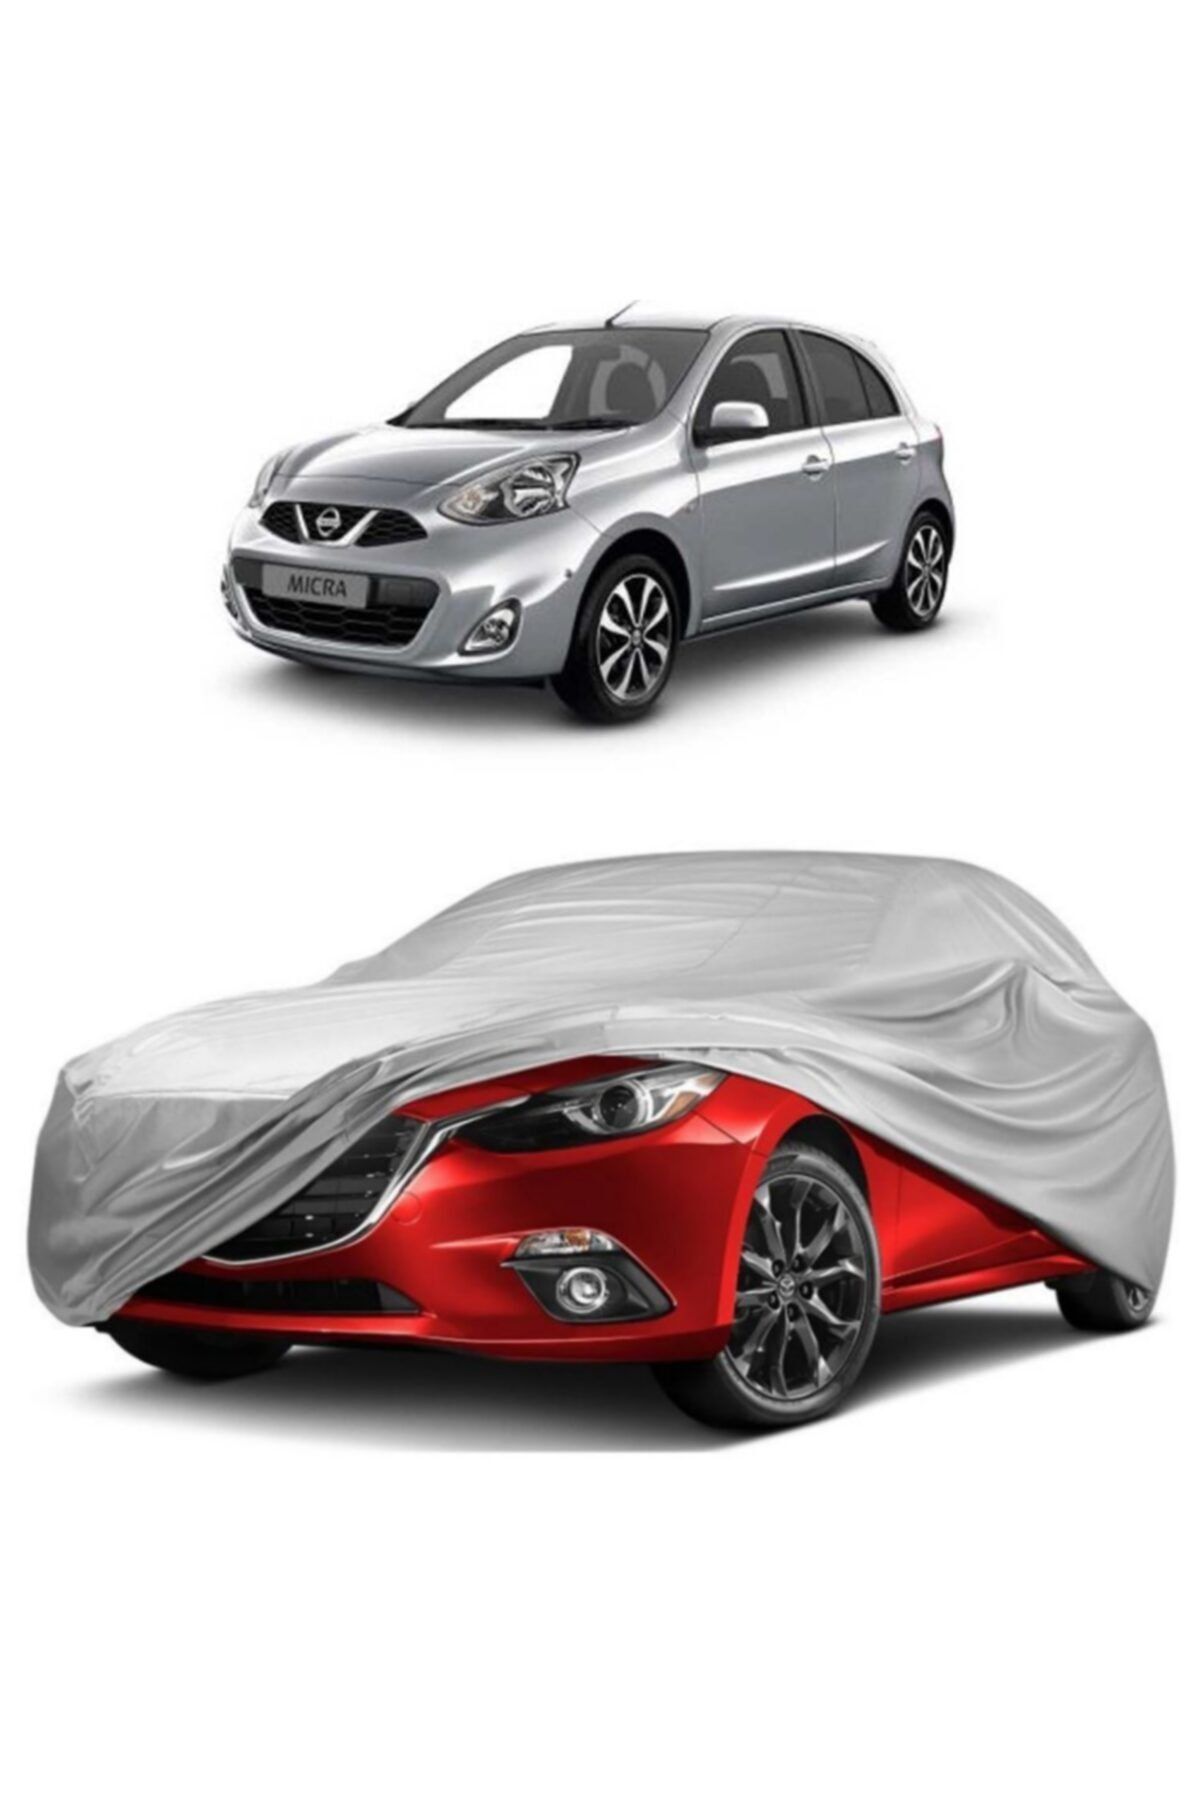 CoverPlus Nissan Micra Car Tarpaulin Miflon Canvas Auto Tent Cover